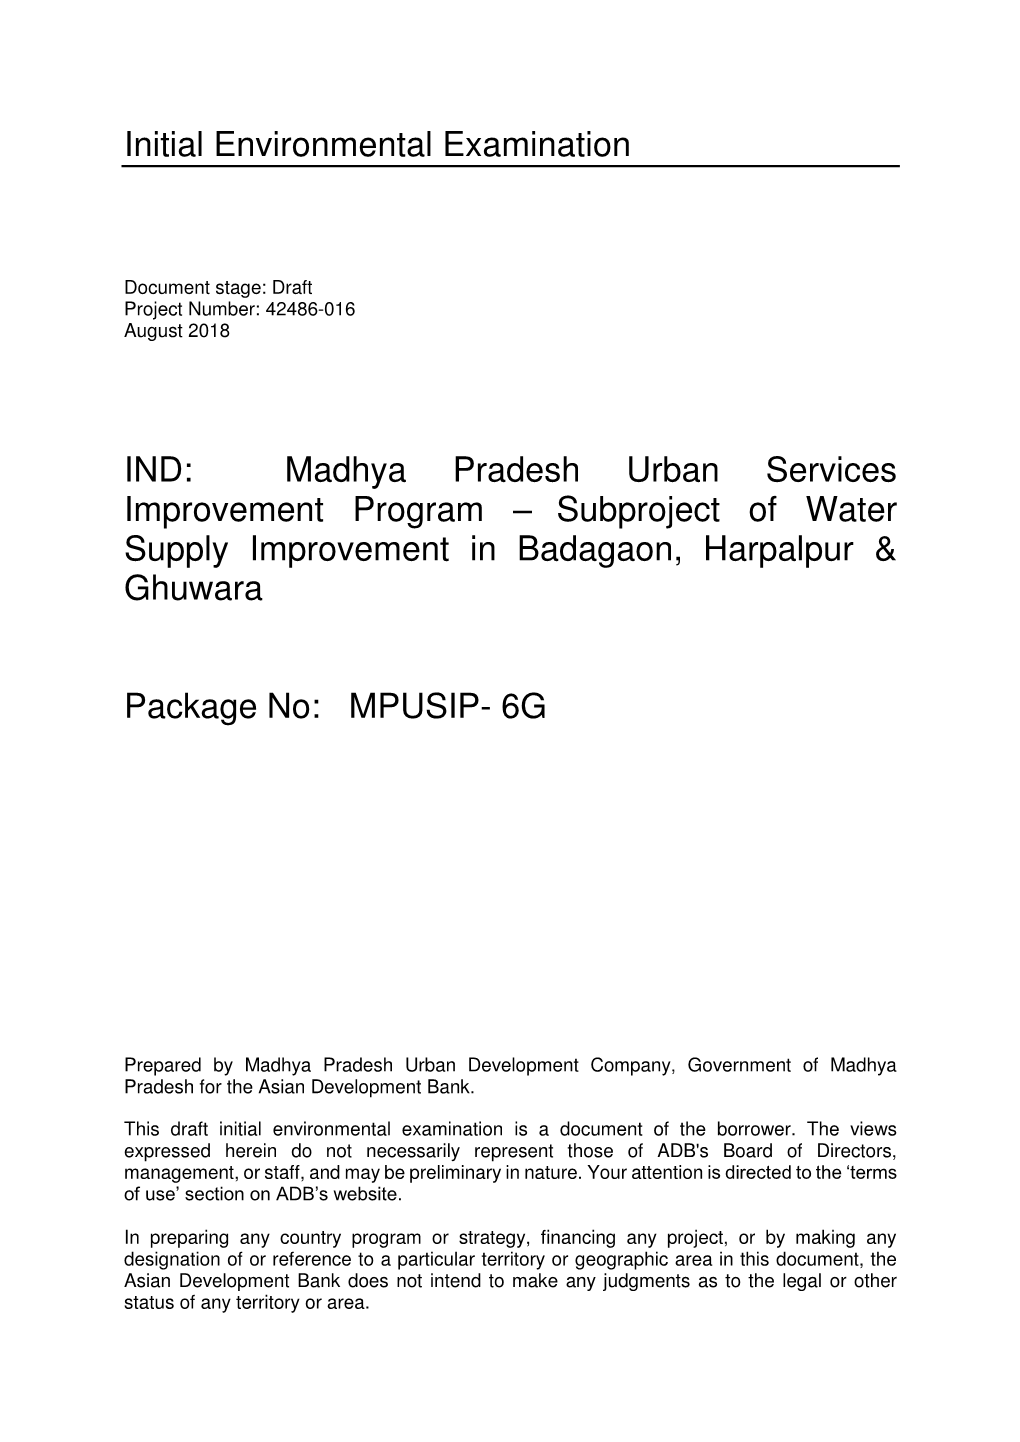 Badagaon, Harpalpur & Ghuwara Water Supply Improvement